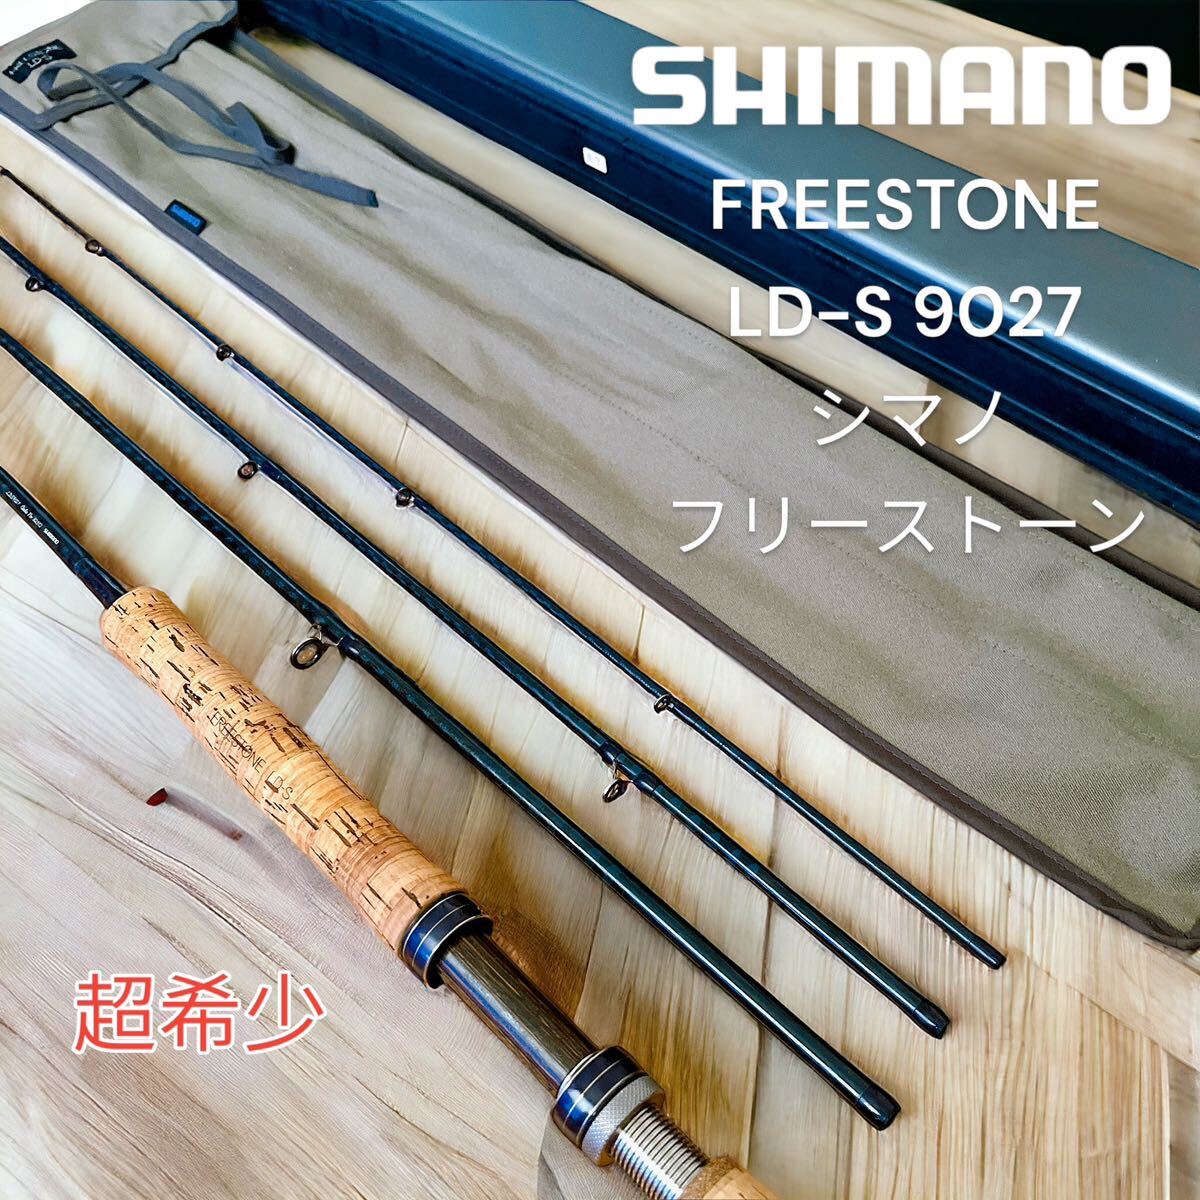 SHIMANO FREESTONE LD-S 9027 フリーストーンシマノ _画像1